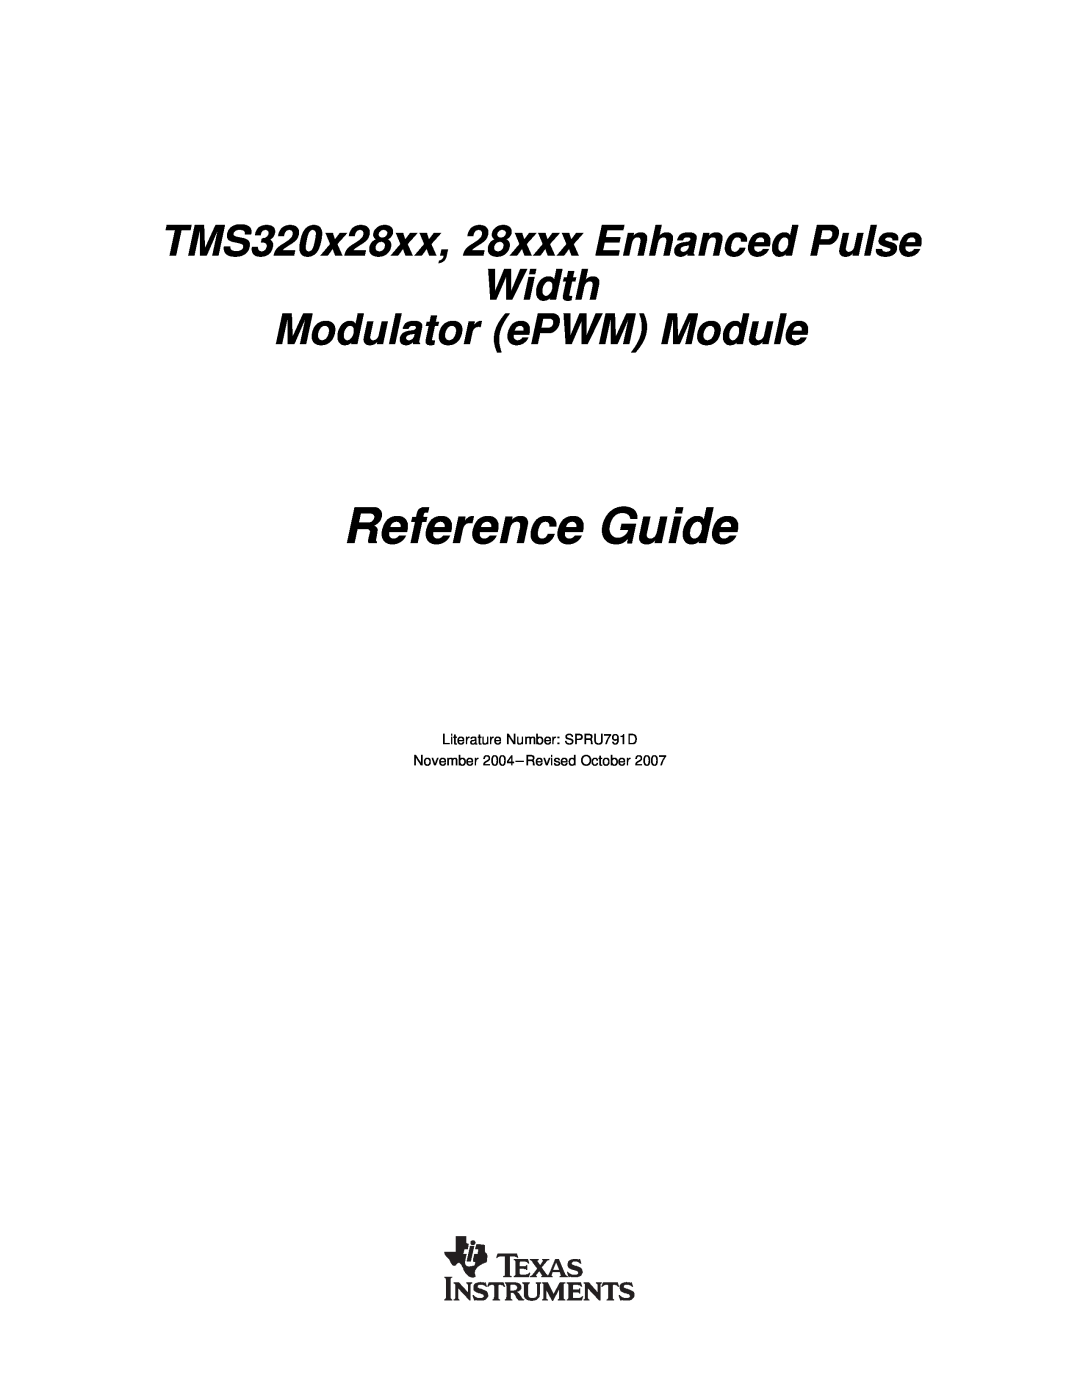 Texas Instruments manual Reference Guide, TMS320x28xx, 28xxx Enhanced Pulse Width Modulator ePWM Module 